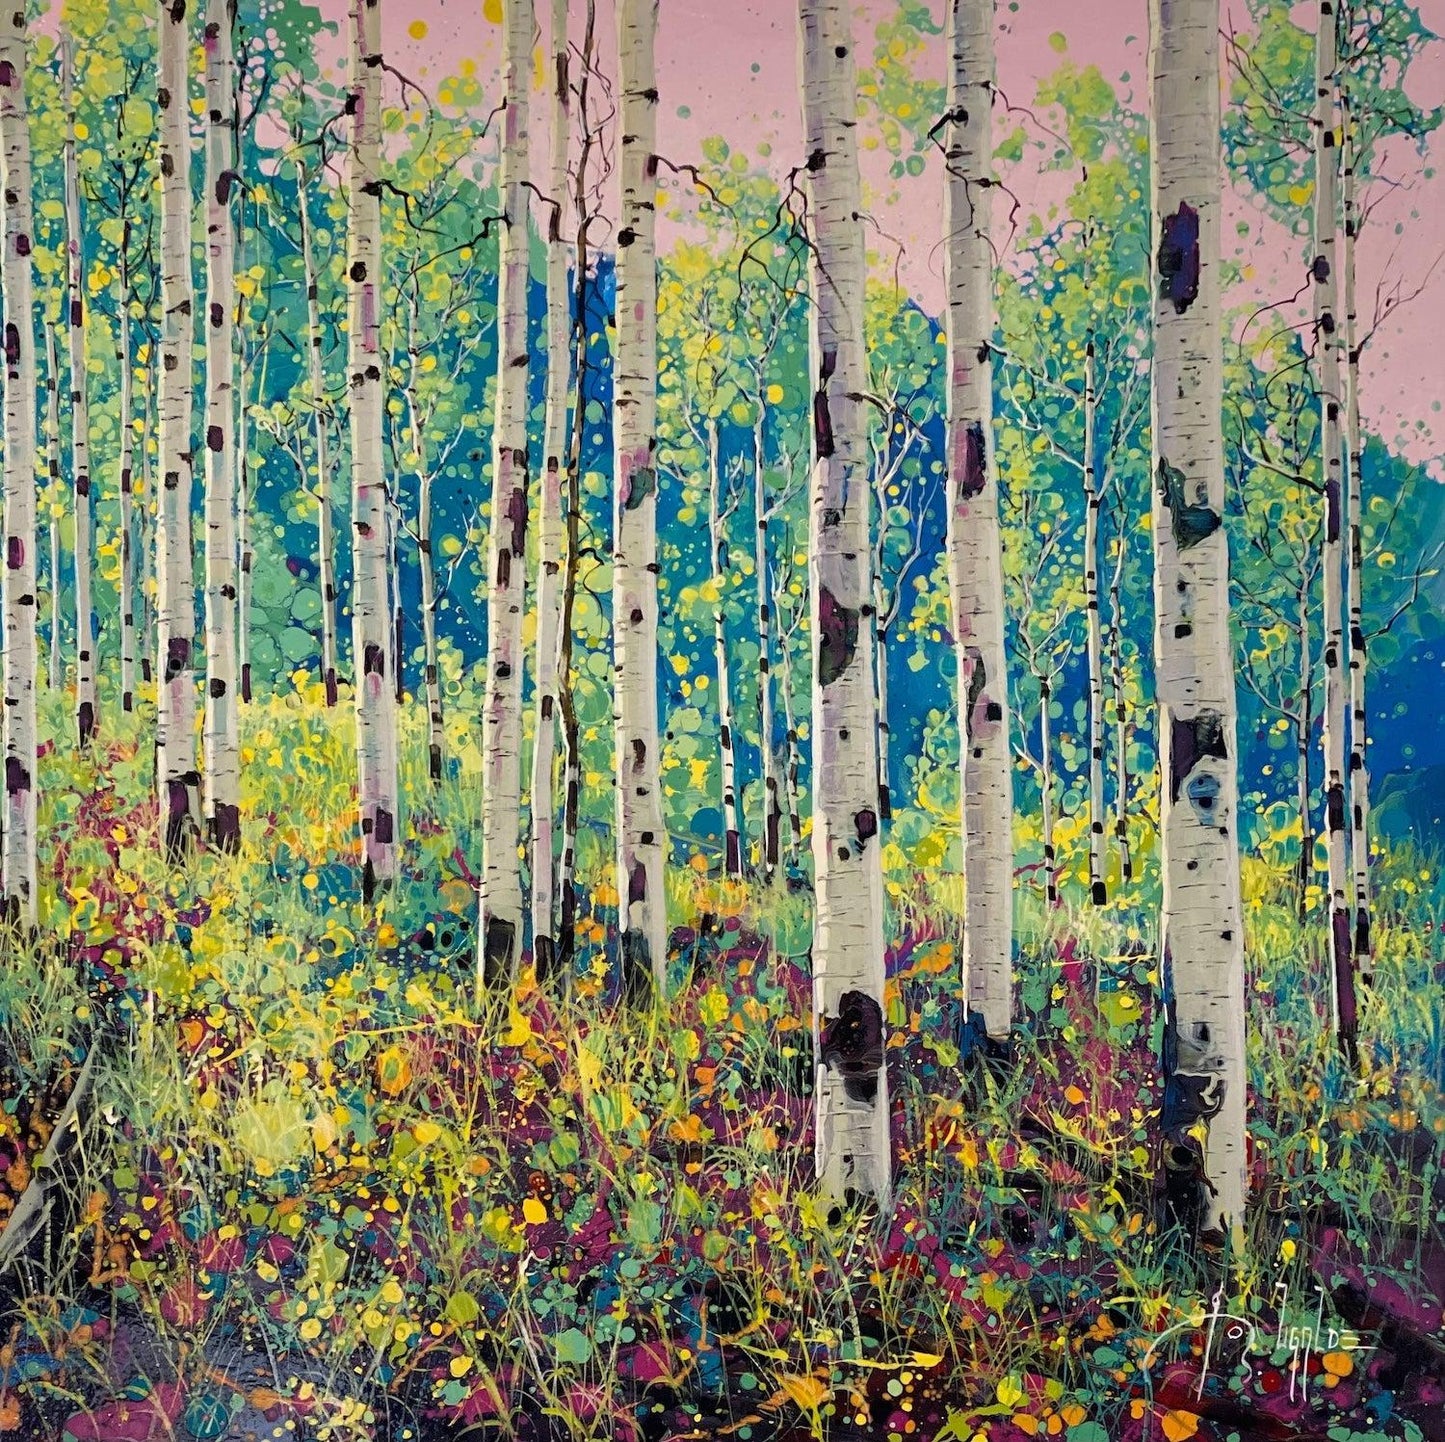 Aspen Grove Summer-Painting-Roberto Ugalde-Sorrel Sky Gallery